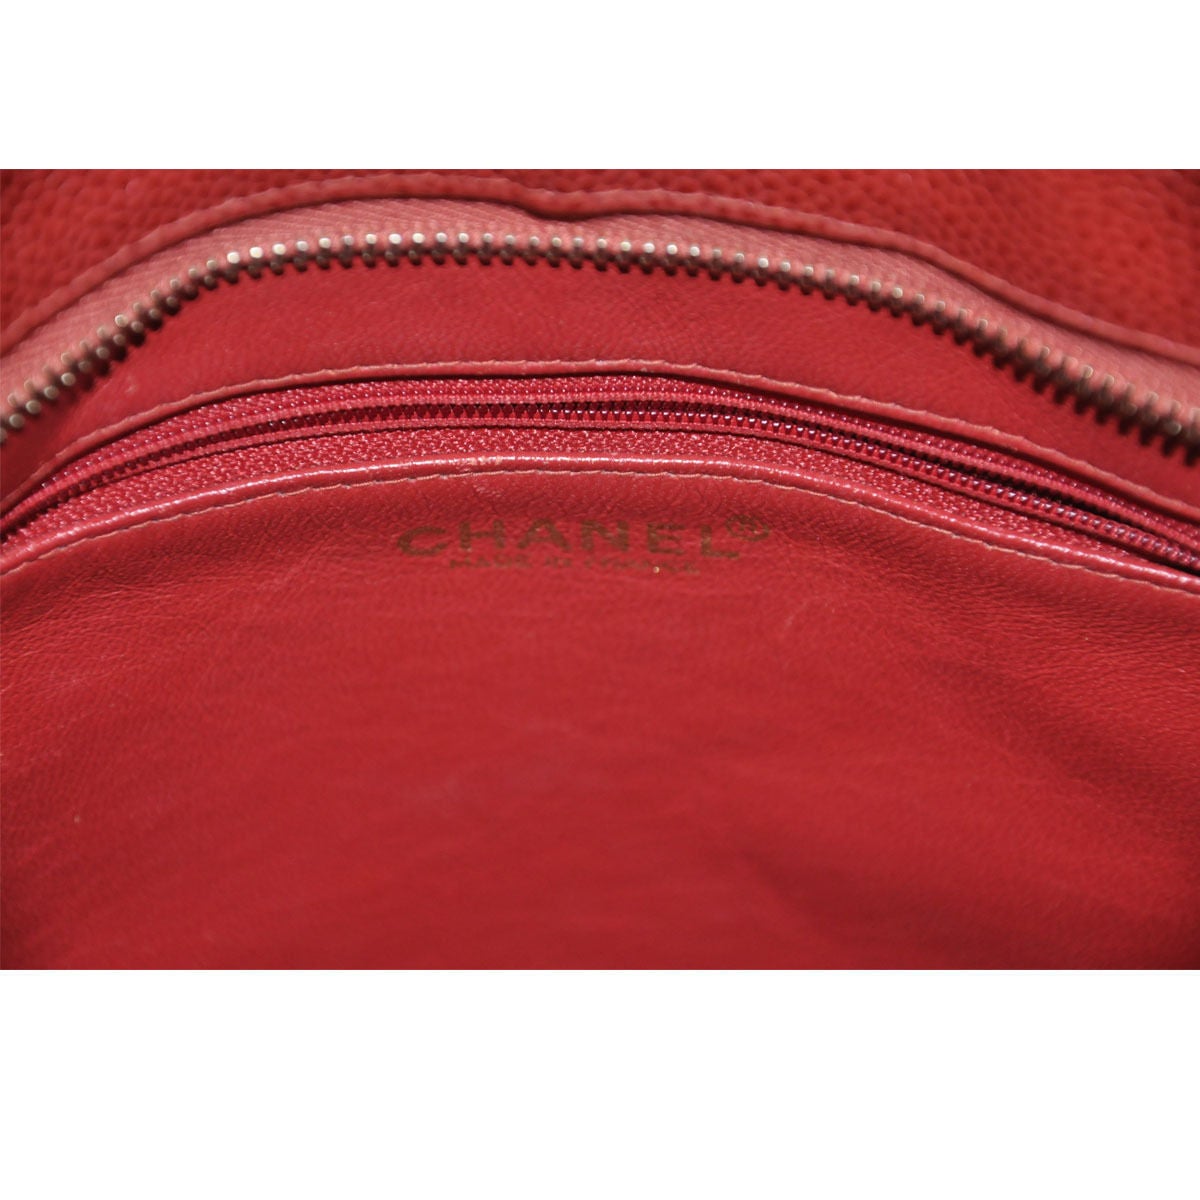 Chanel Red Medallion Caviar Tote Shoulder Handbag 1